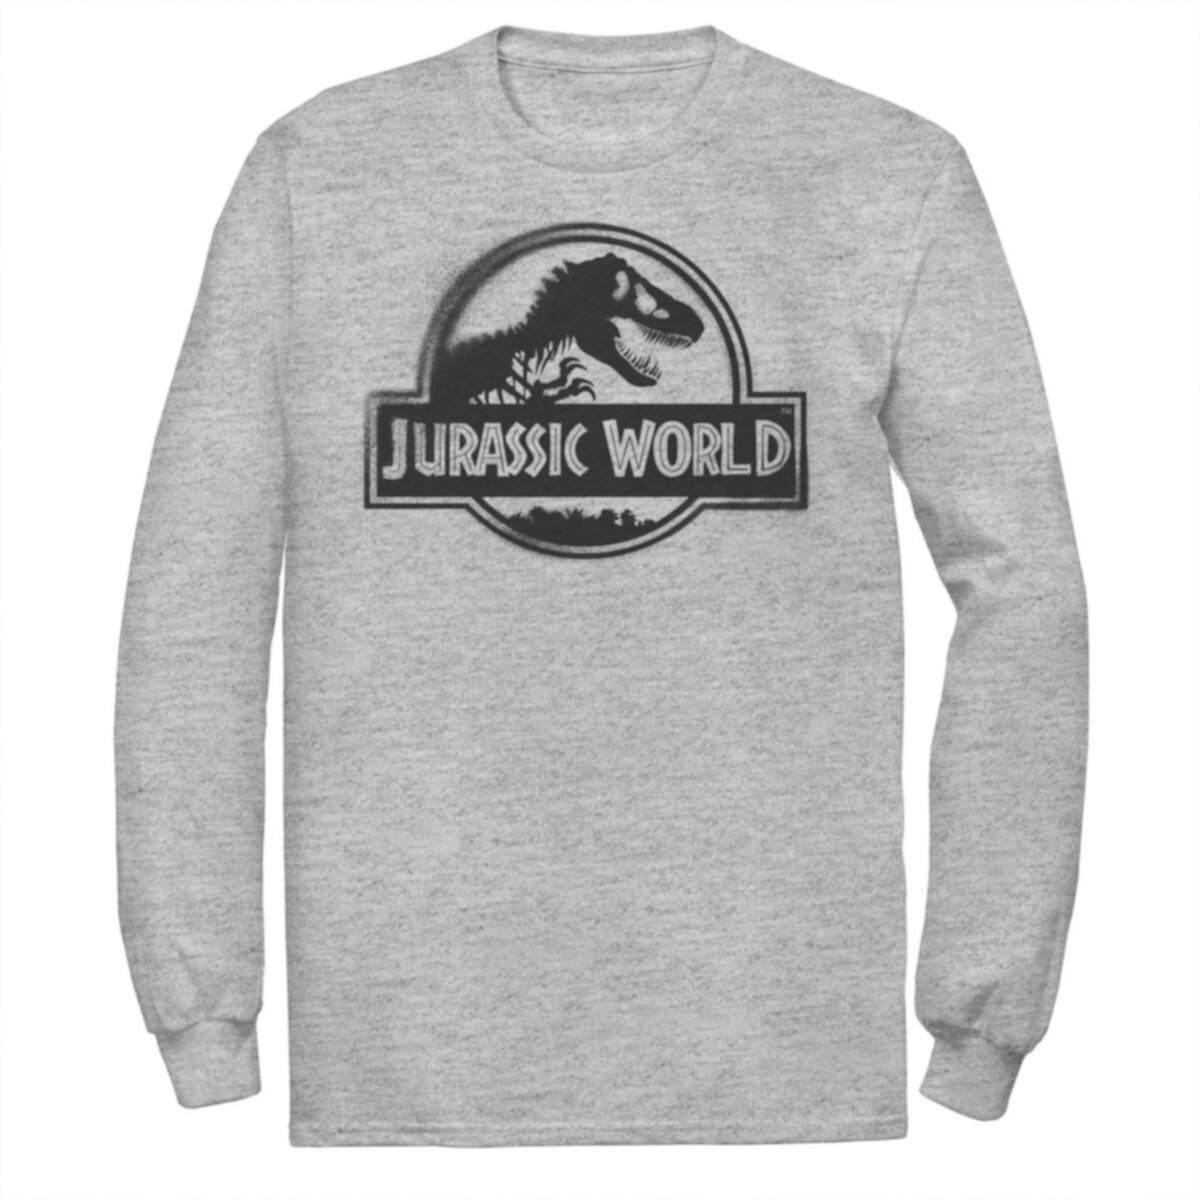 Мужская футболка с логотипом Jurassic World Two Black Spray Paint Jurassic World